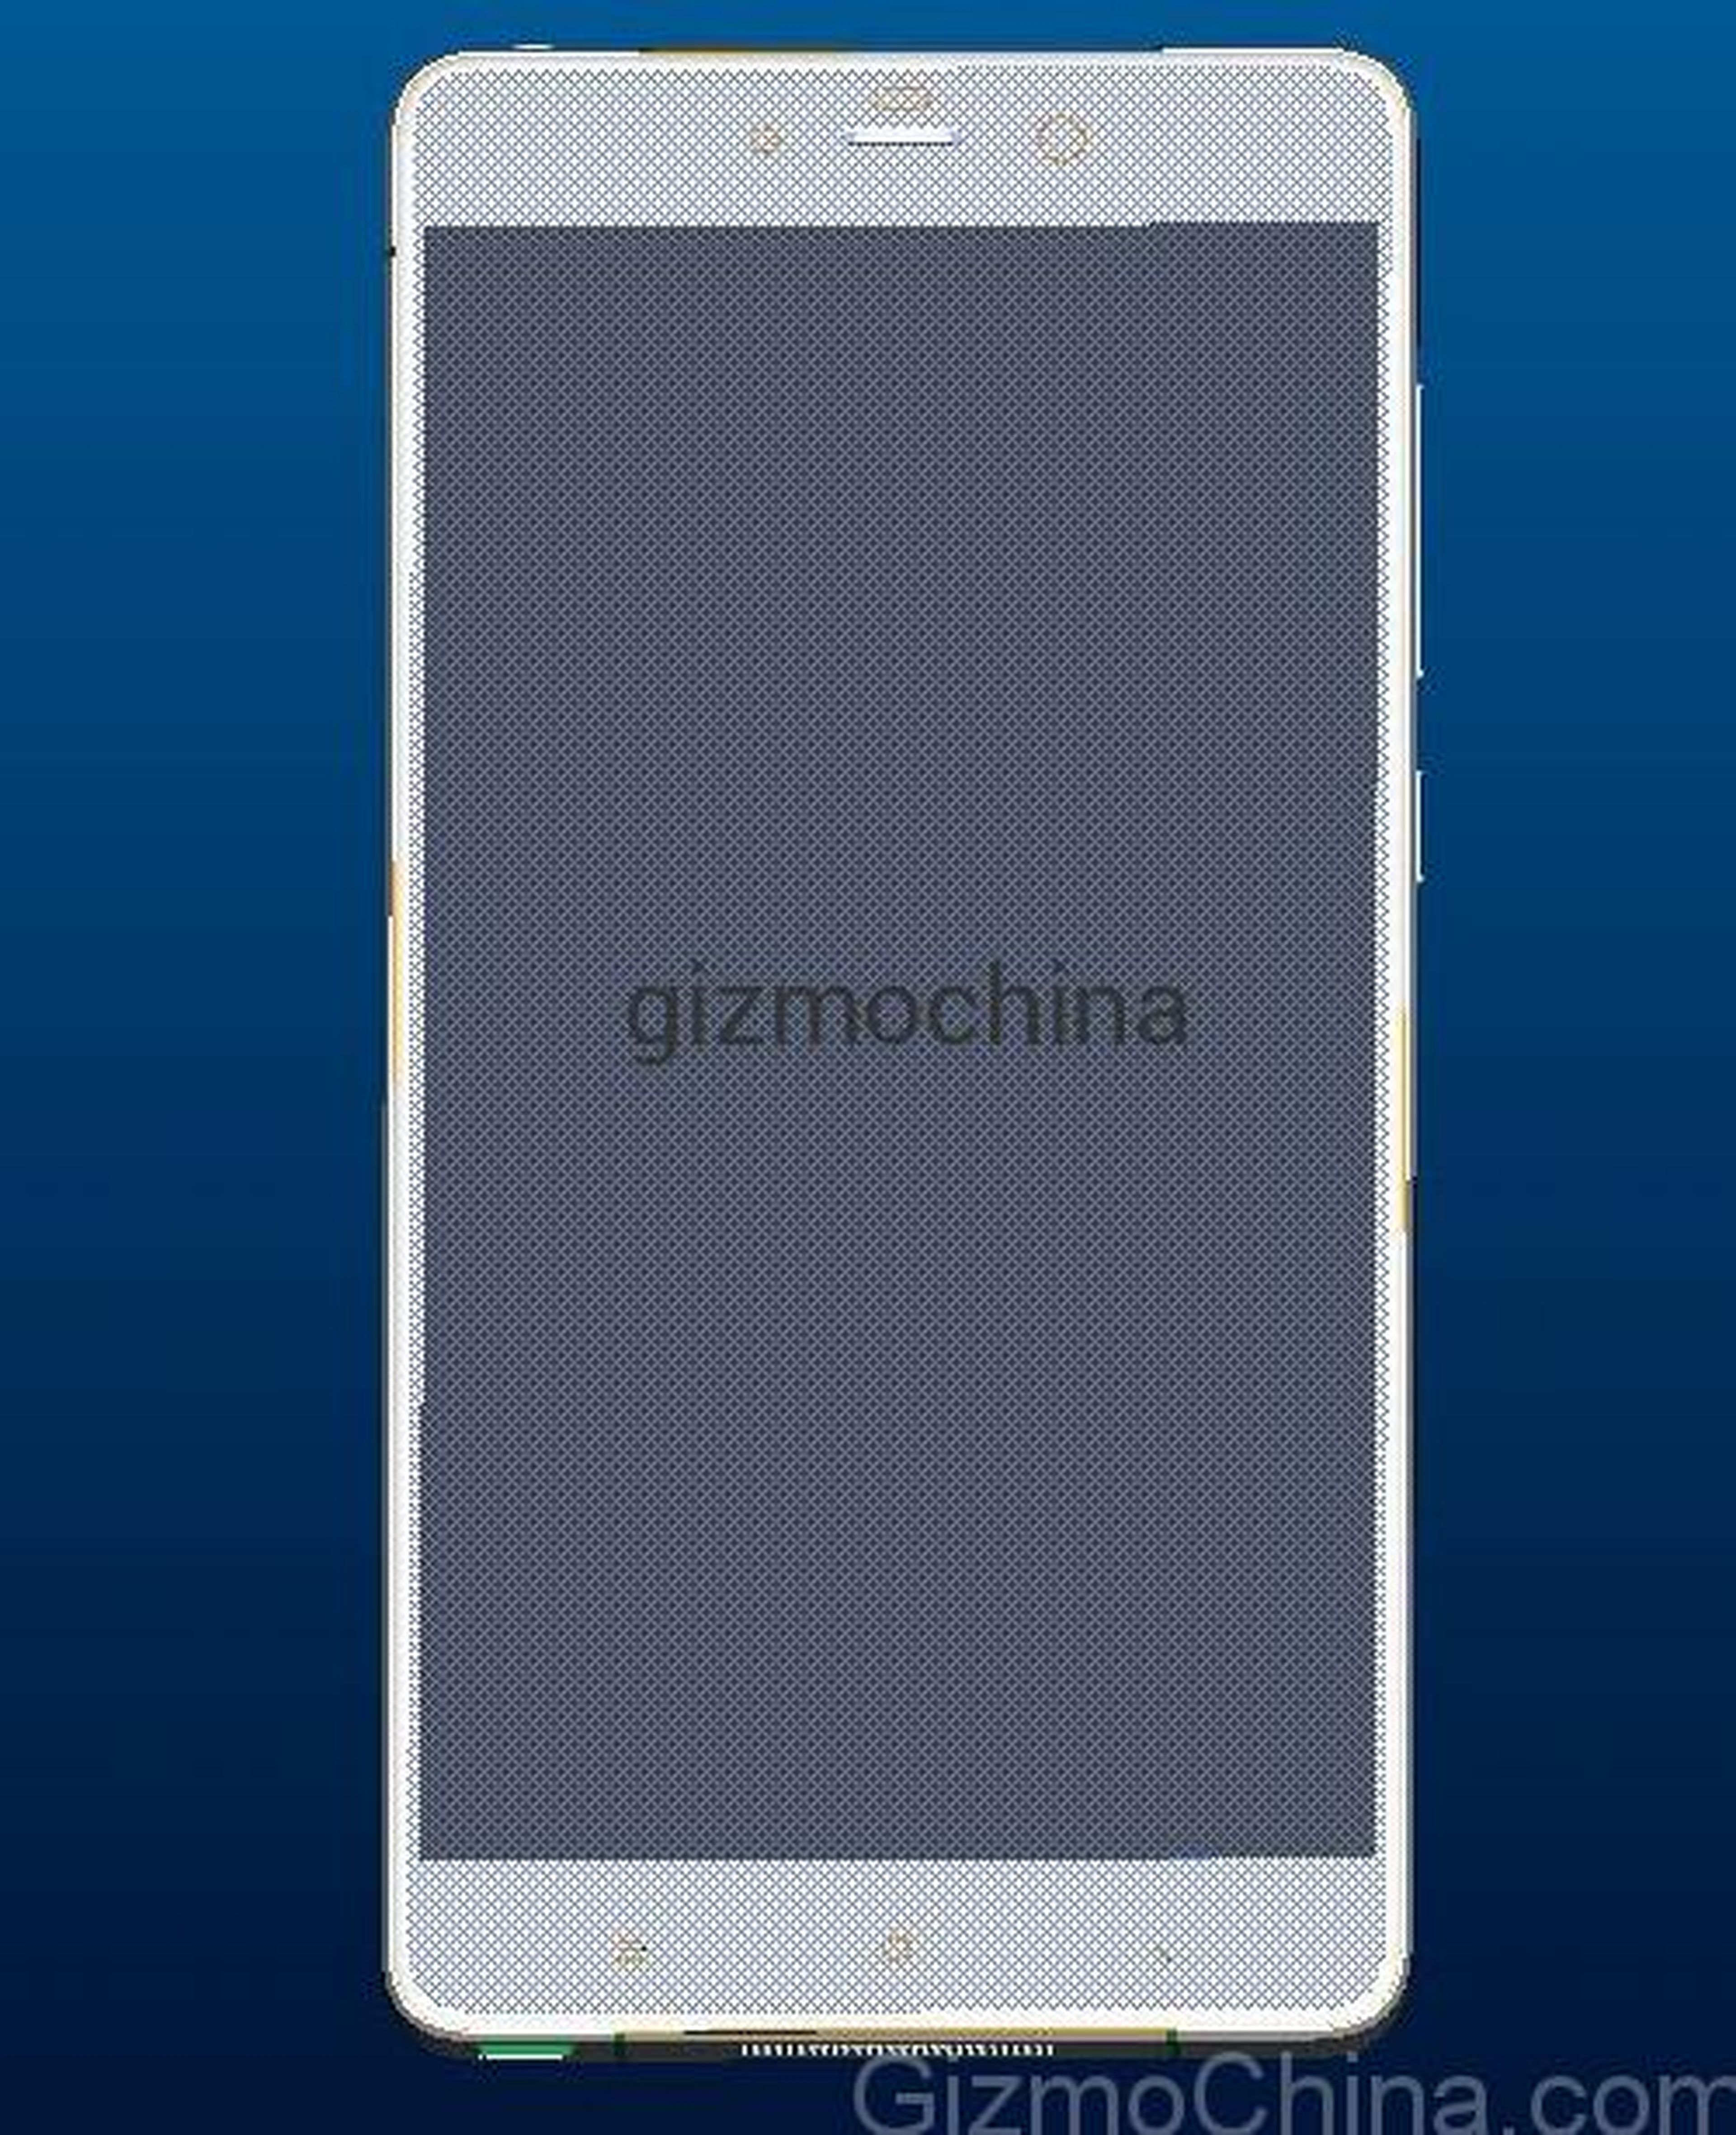 Xiaomi Mi4s imagen filtrada